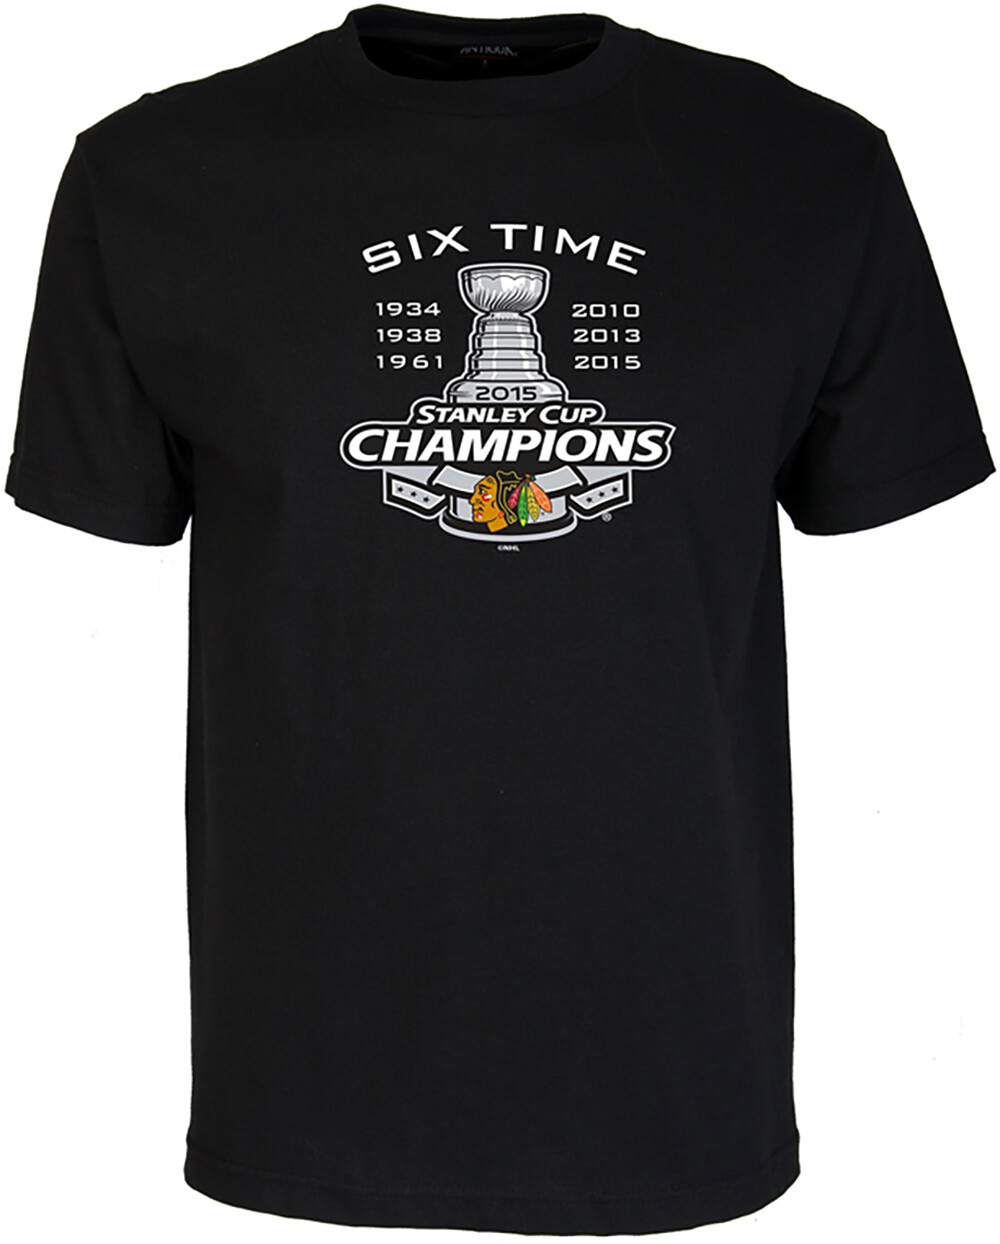 Blackhawks Stanley Cup champions jersey